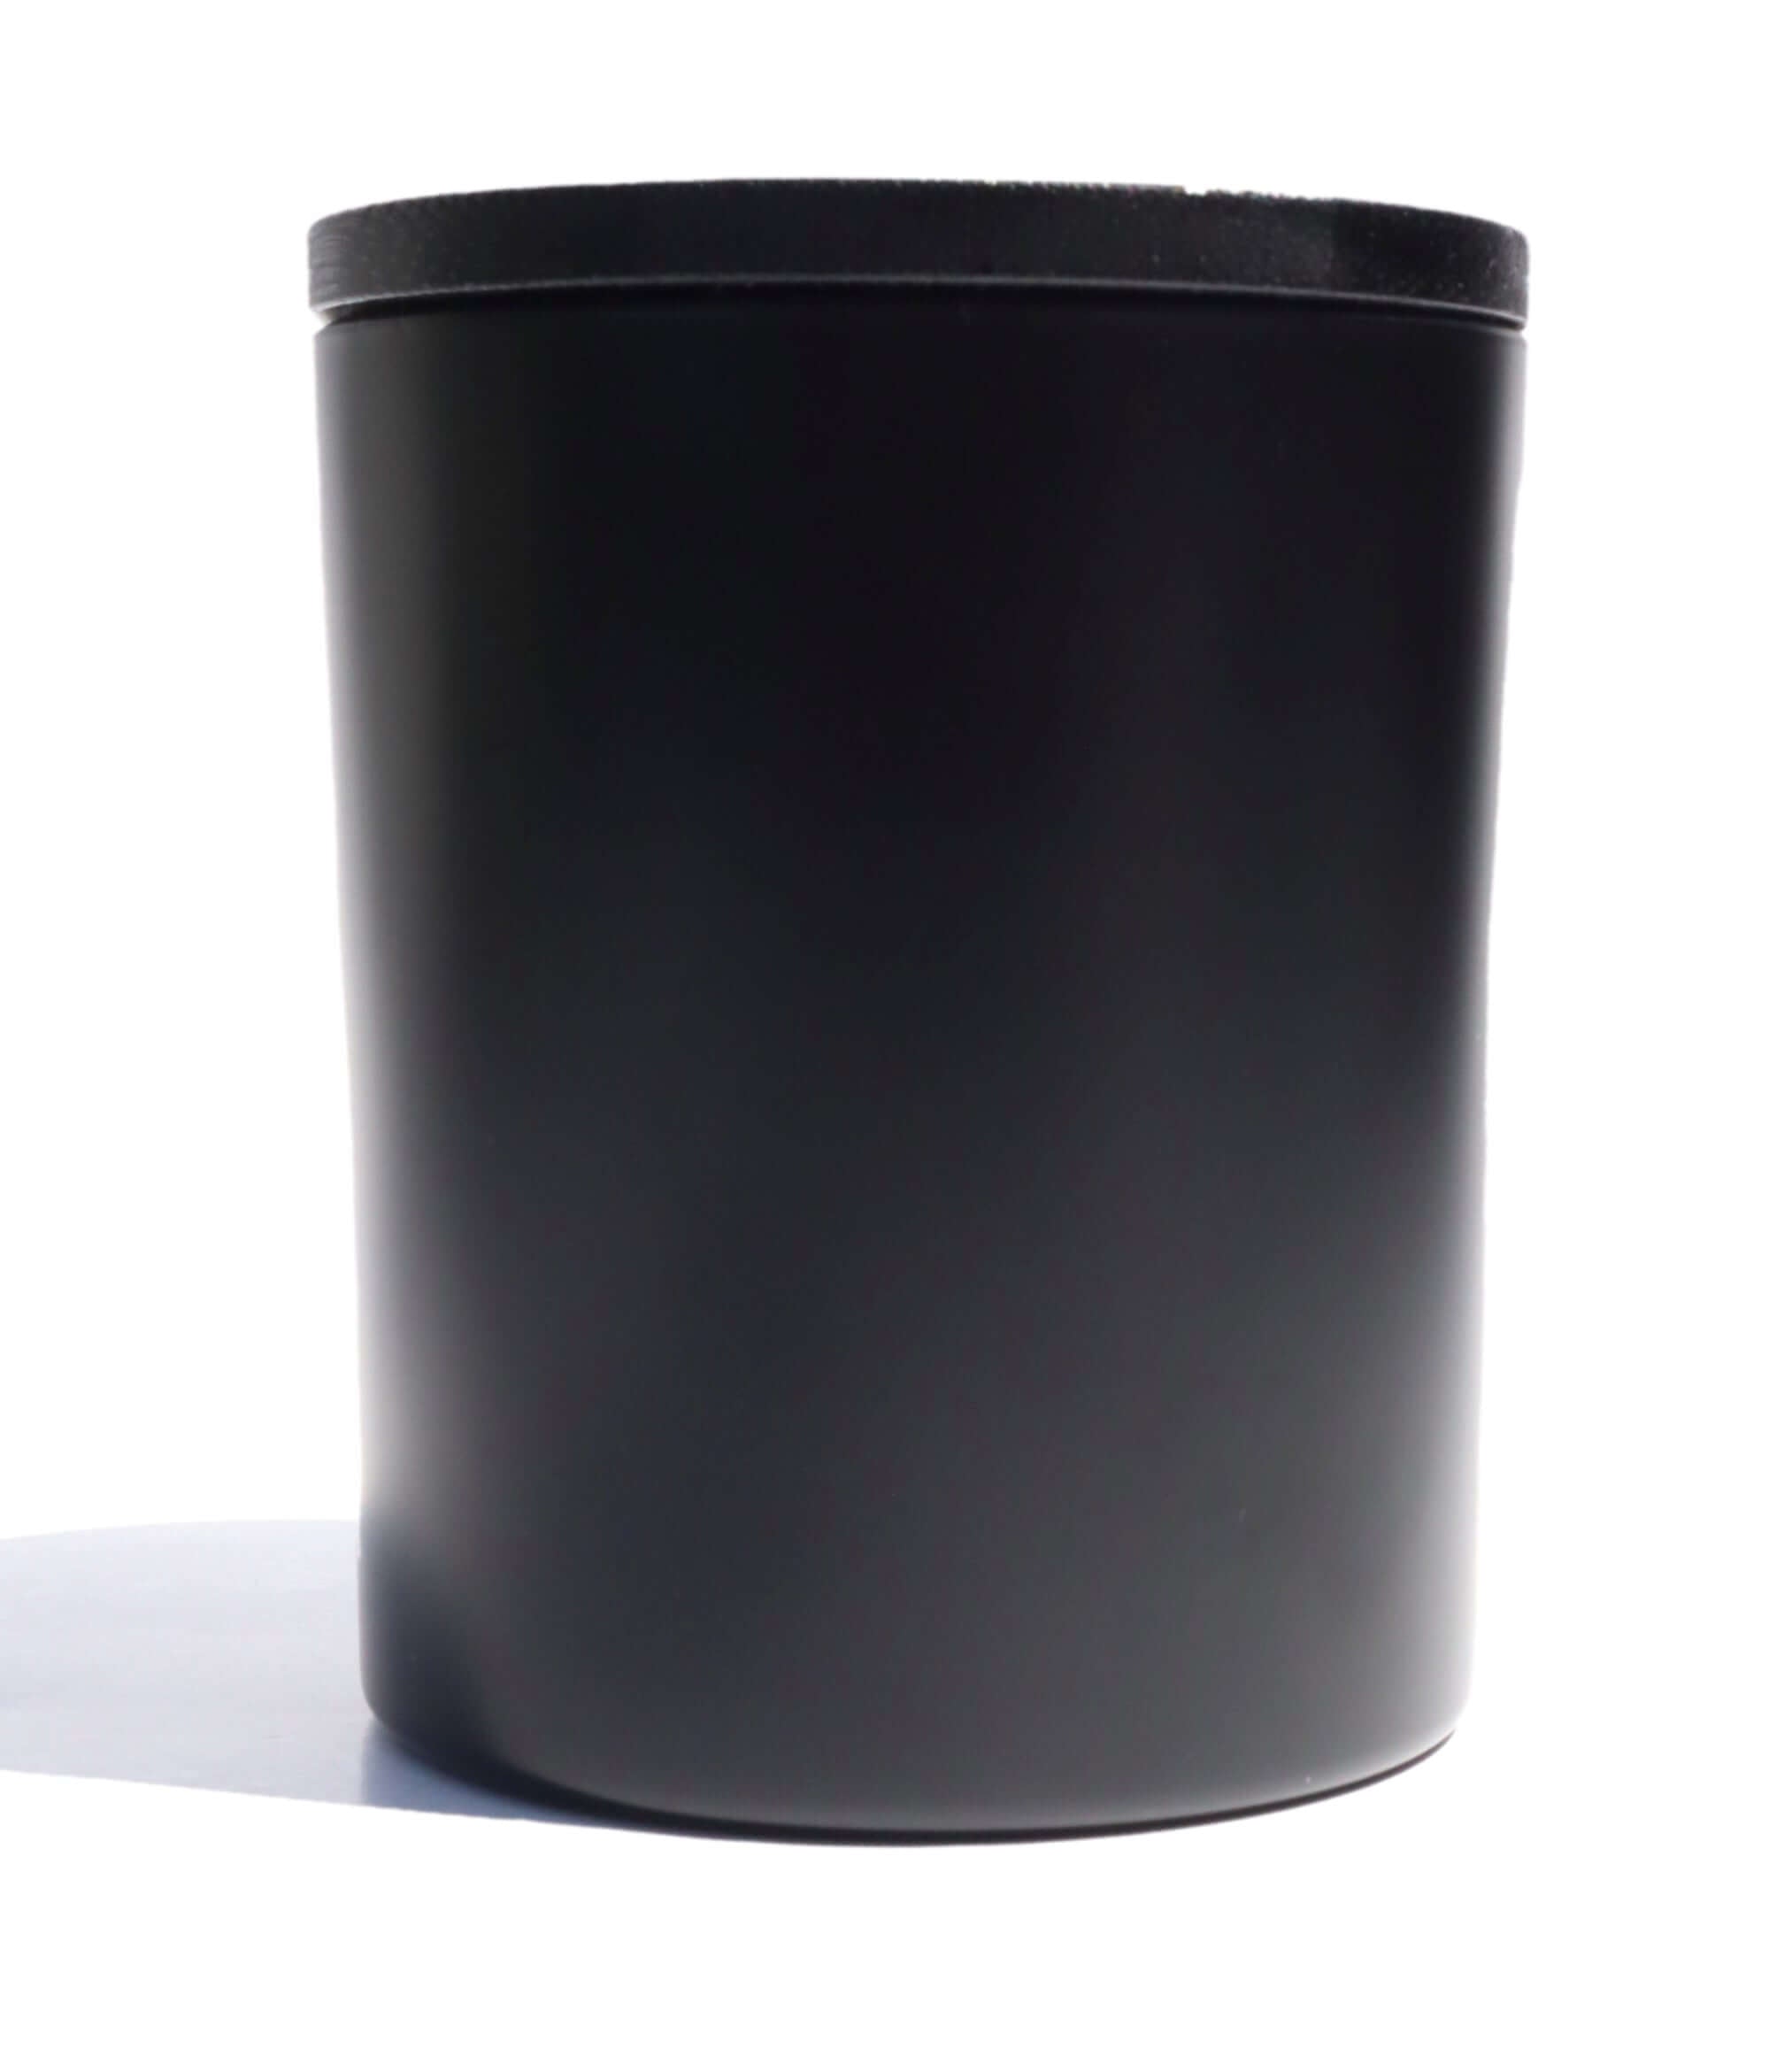 15.5 oz Black matte vessels w/ Bamboo black lids.